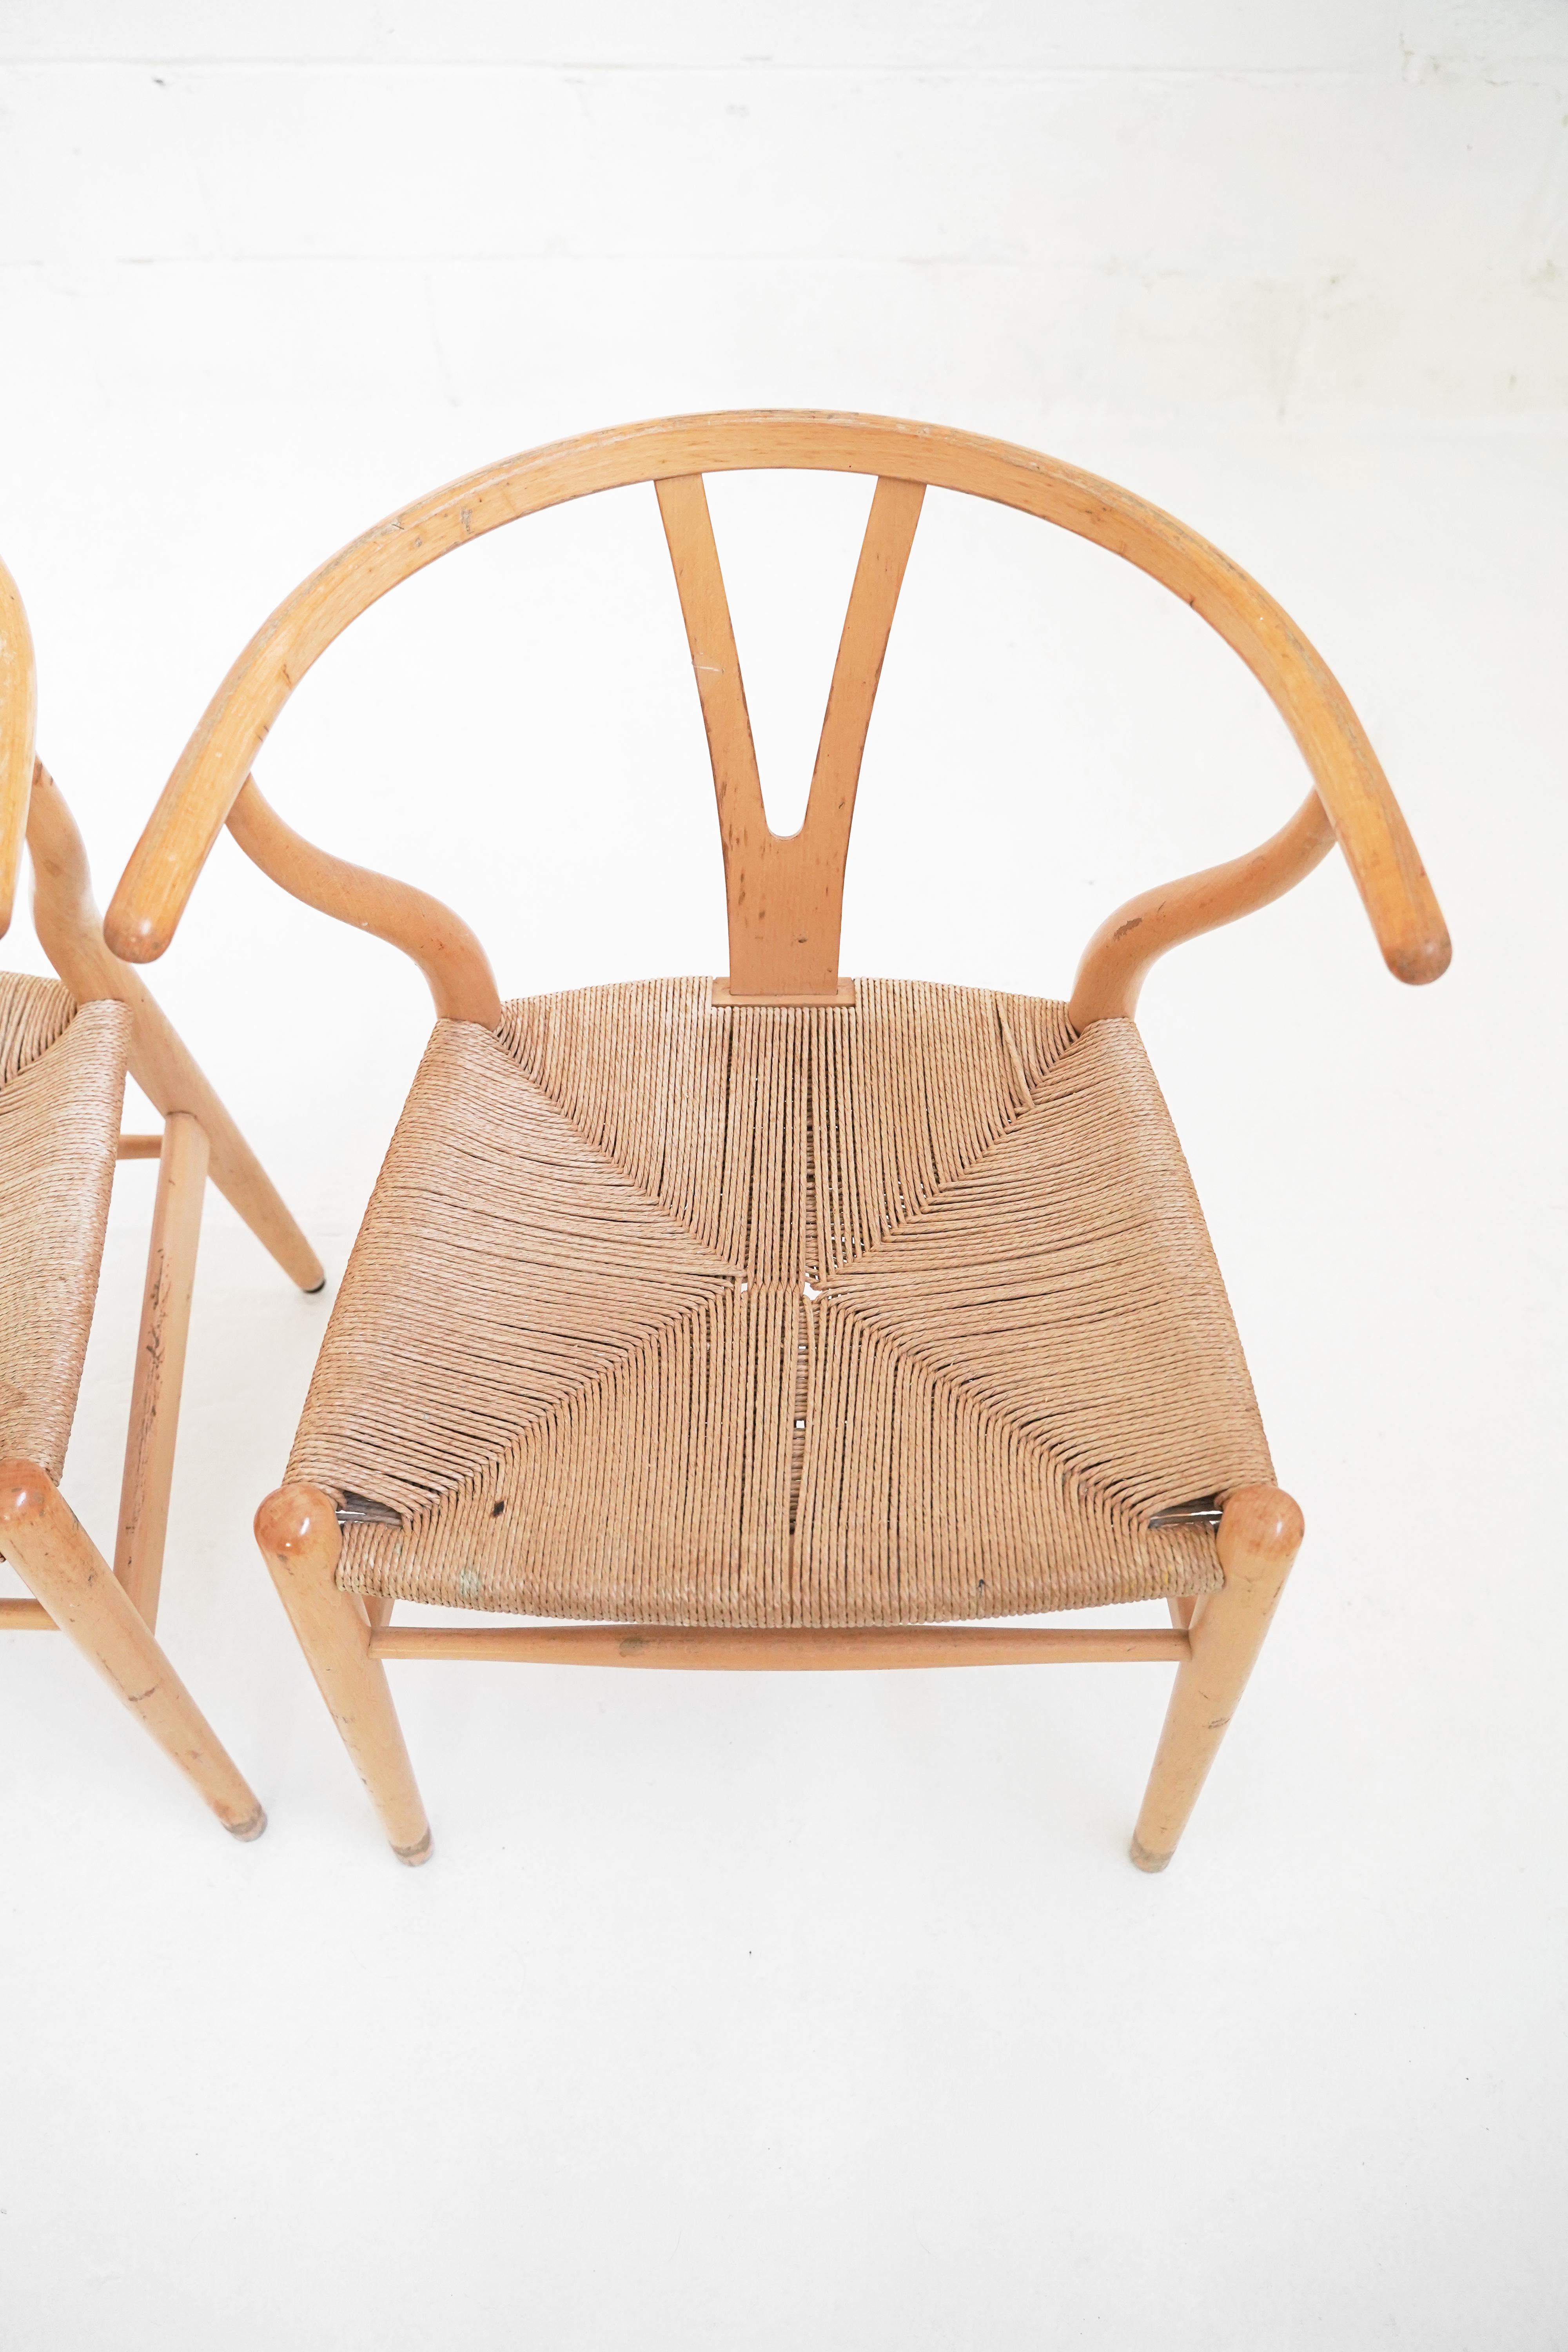 Set of 4 CH24 Wishbone Dining Chairs by Hans Wegner for Carl Hansen & Søn 8